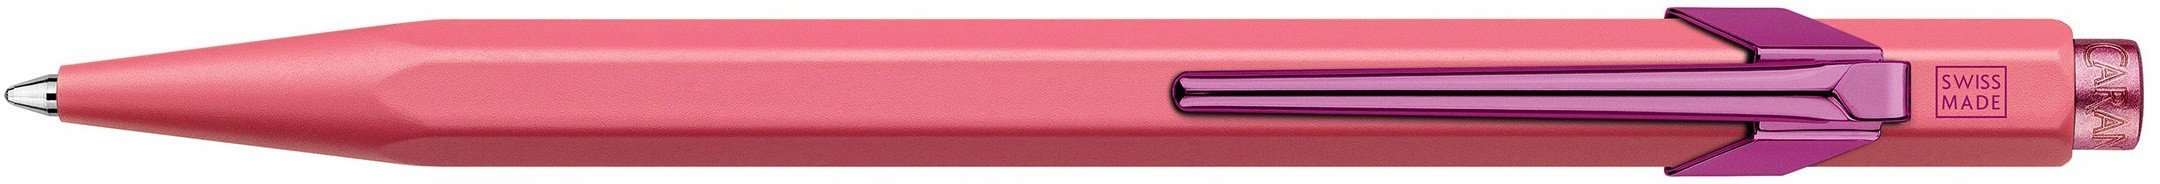 Ручка шариковая Carandache Office 849 Claim your style, розовый матовый, подарочная коробка